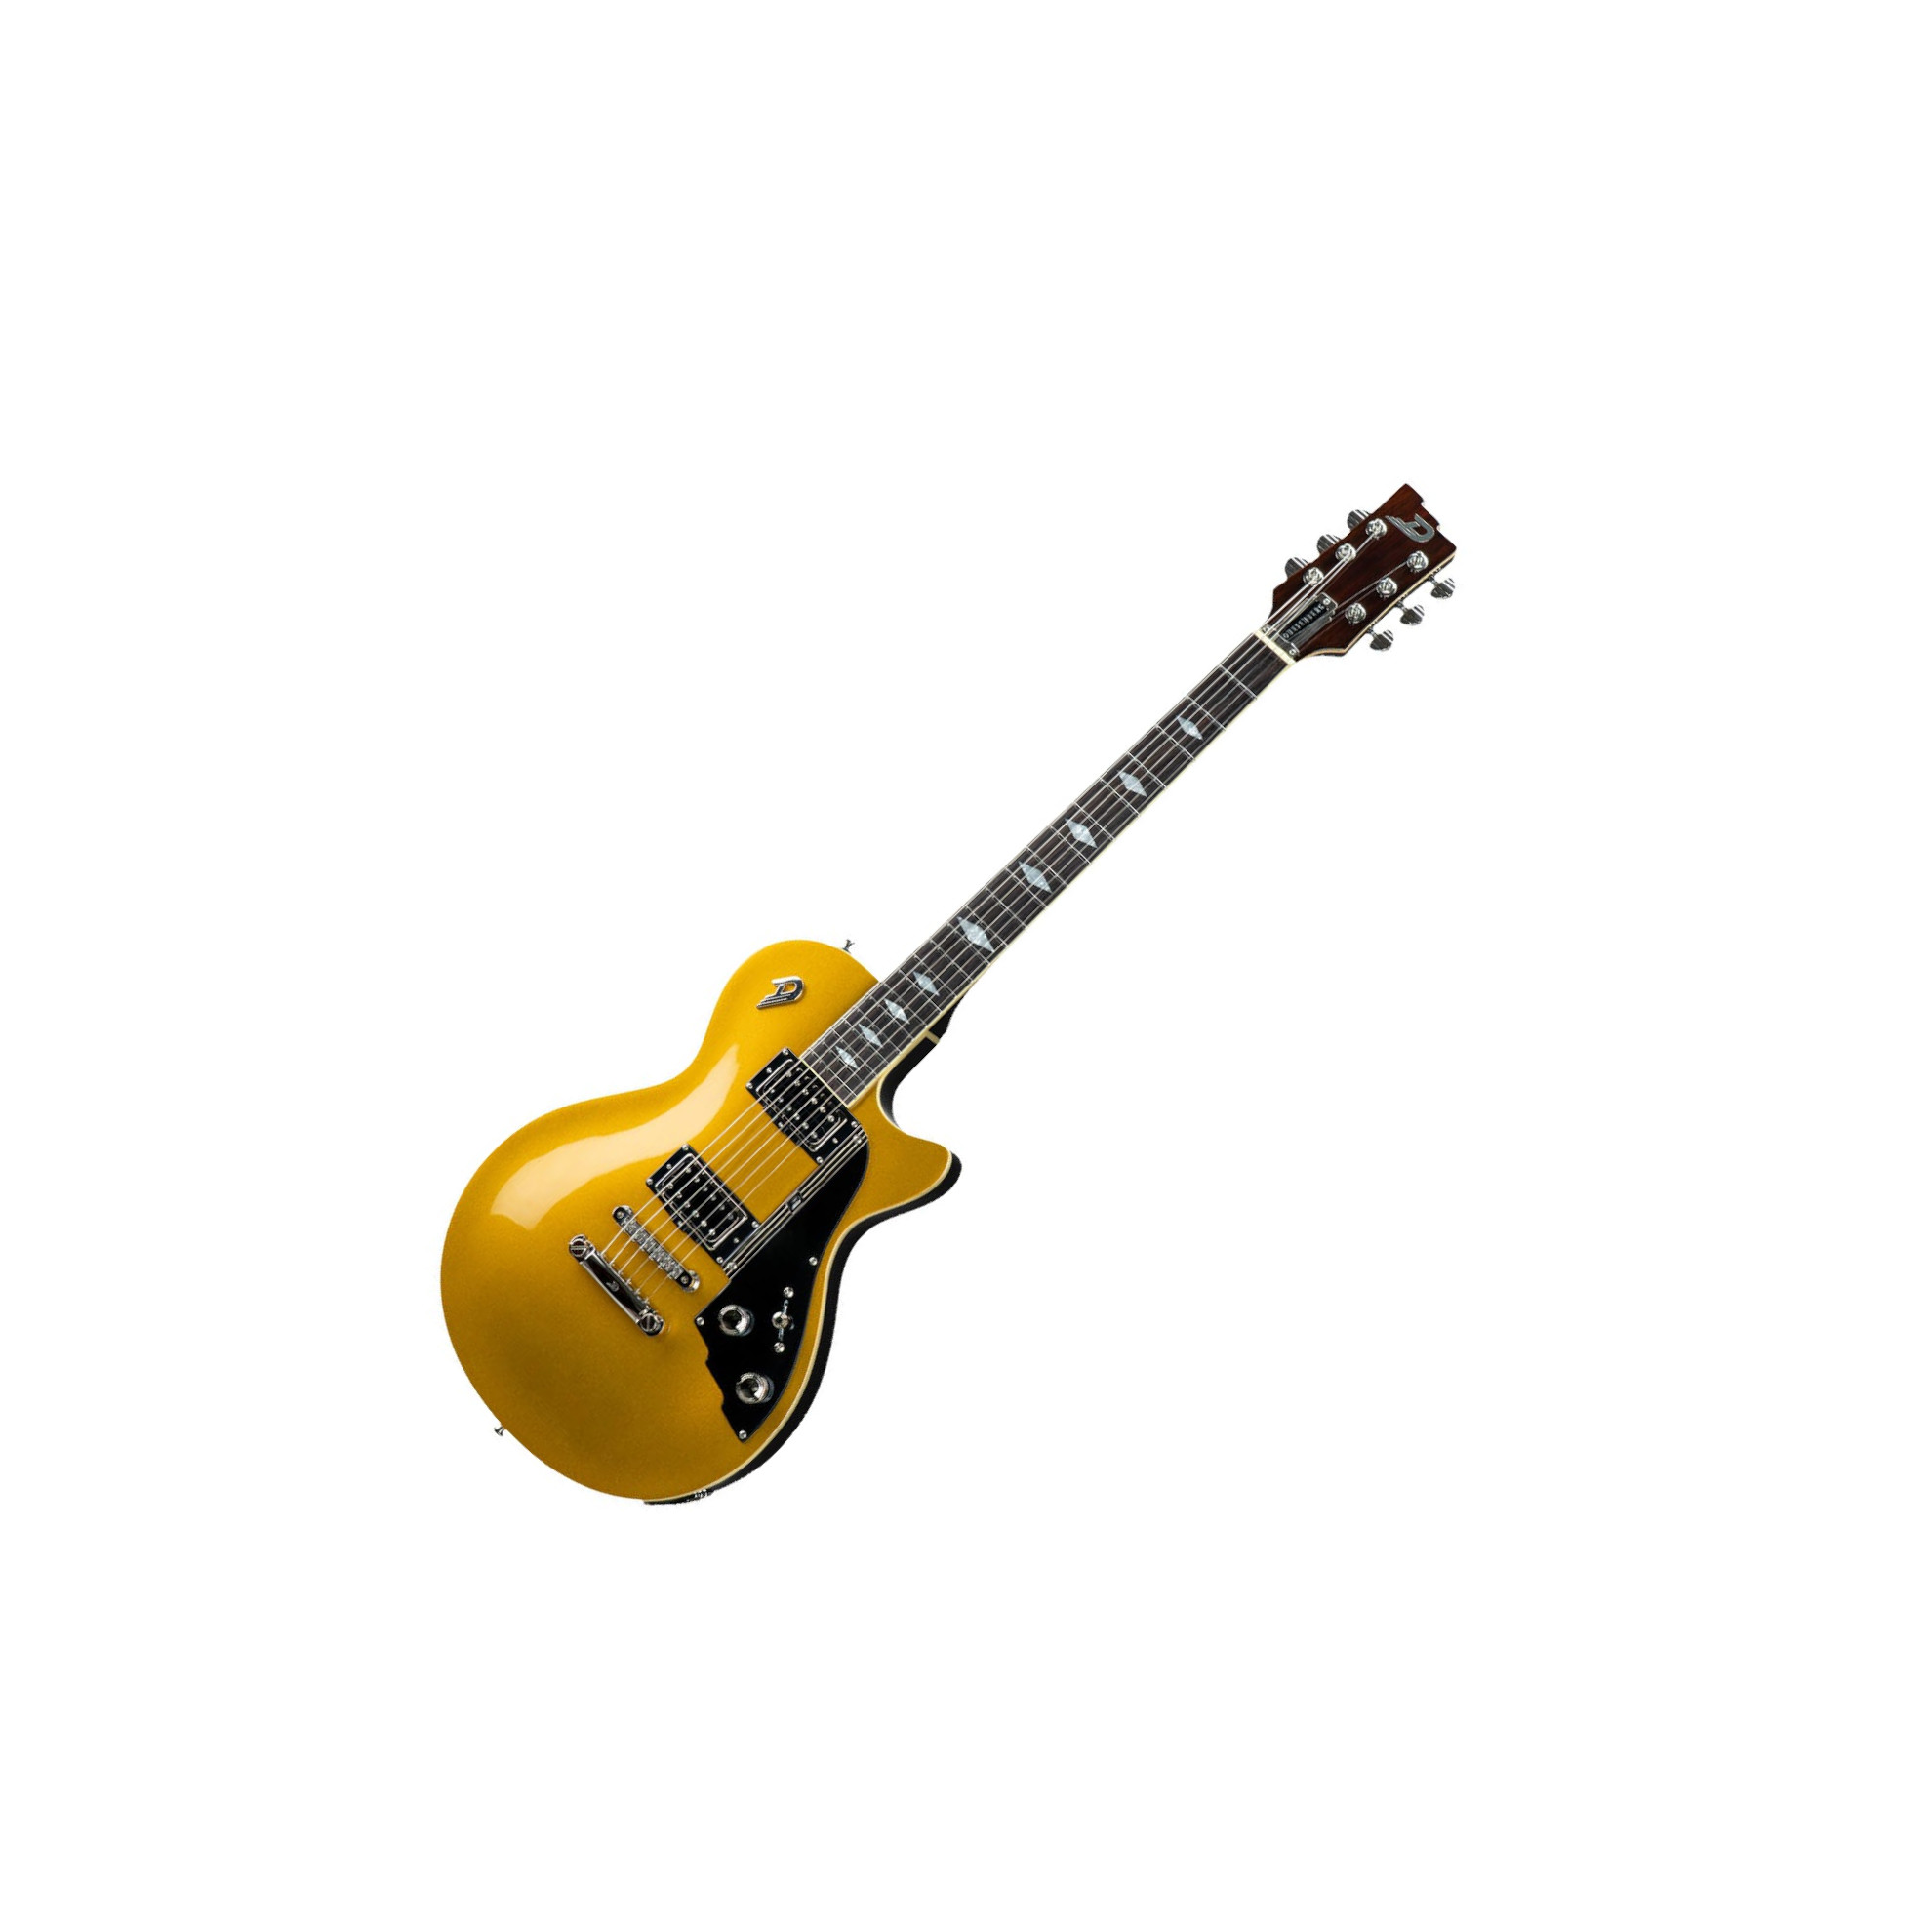 Duesenberg 59er 2h Ht Rw - Gold Top - Single cut electric guitar - Variation 1